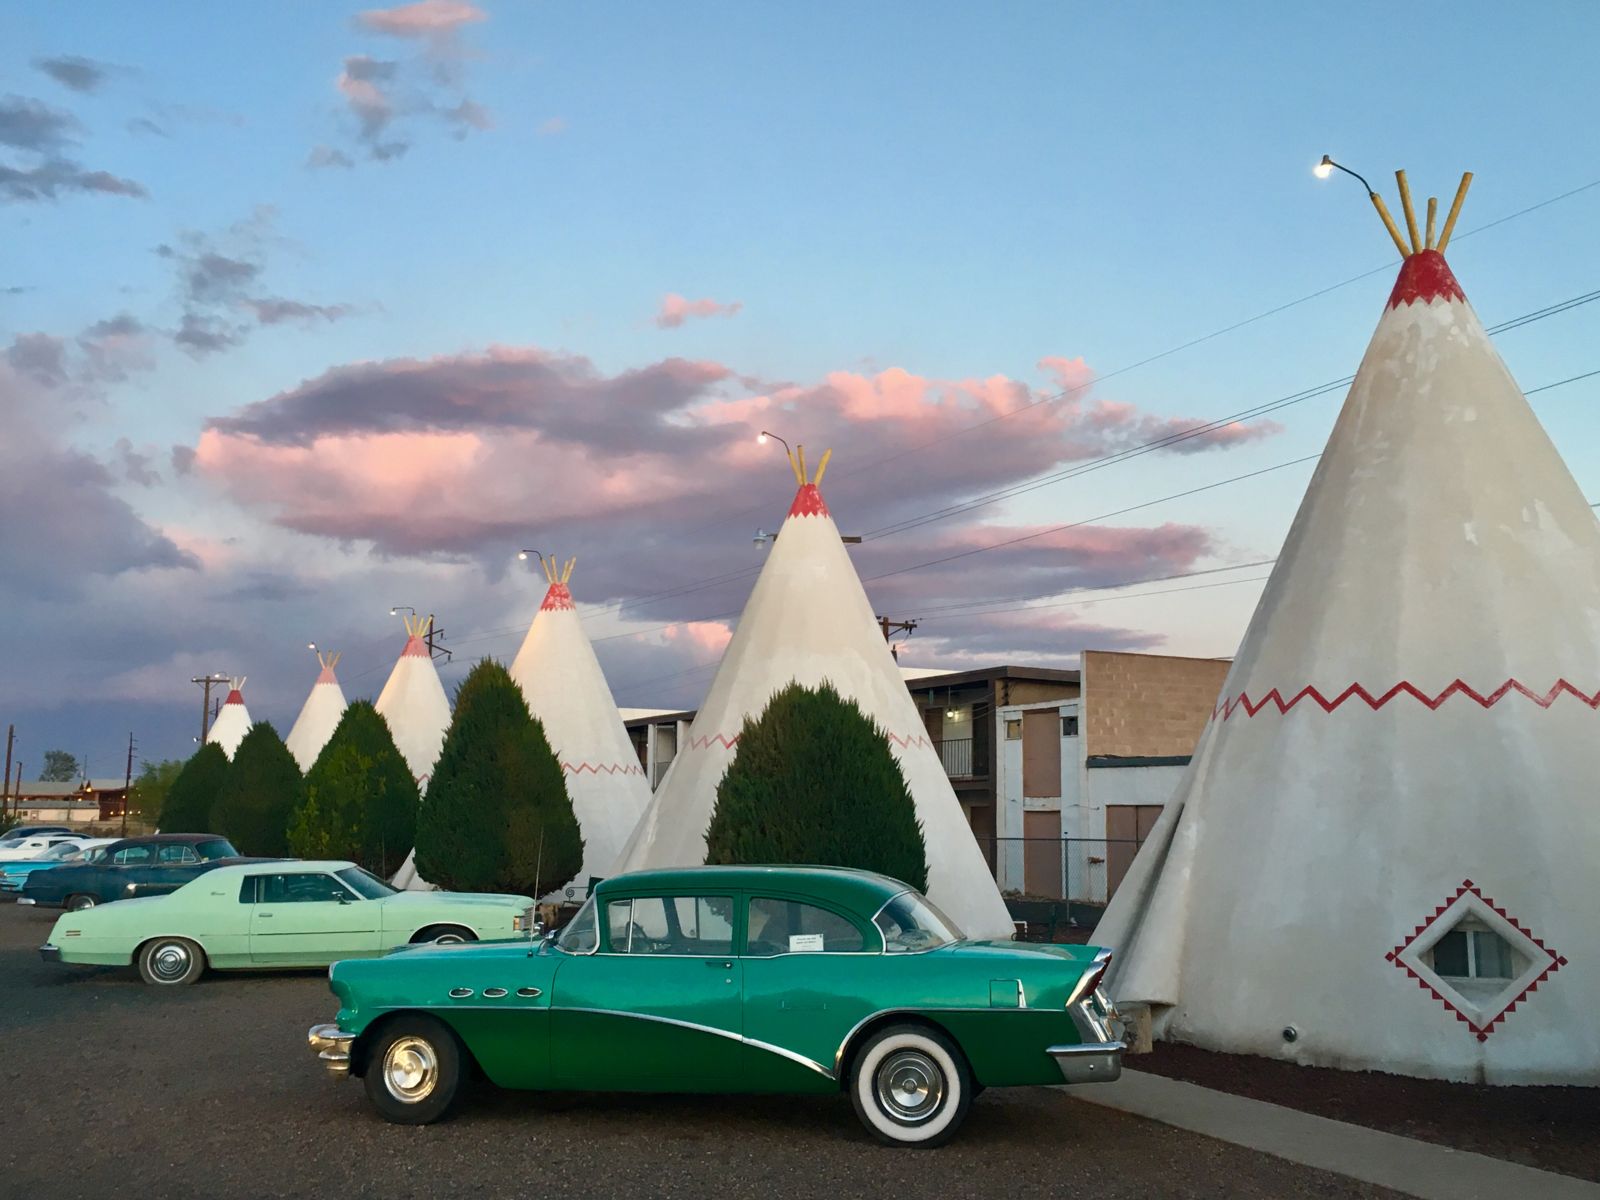 Wigwam Motel on Route 66 Holbrook, AZ - Photo by Jessica Dunham